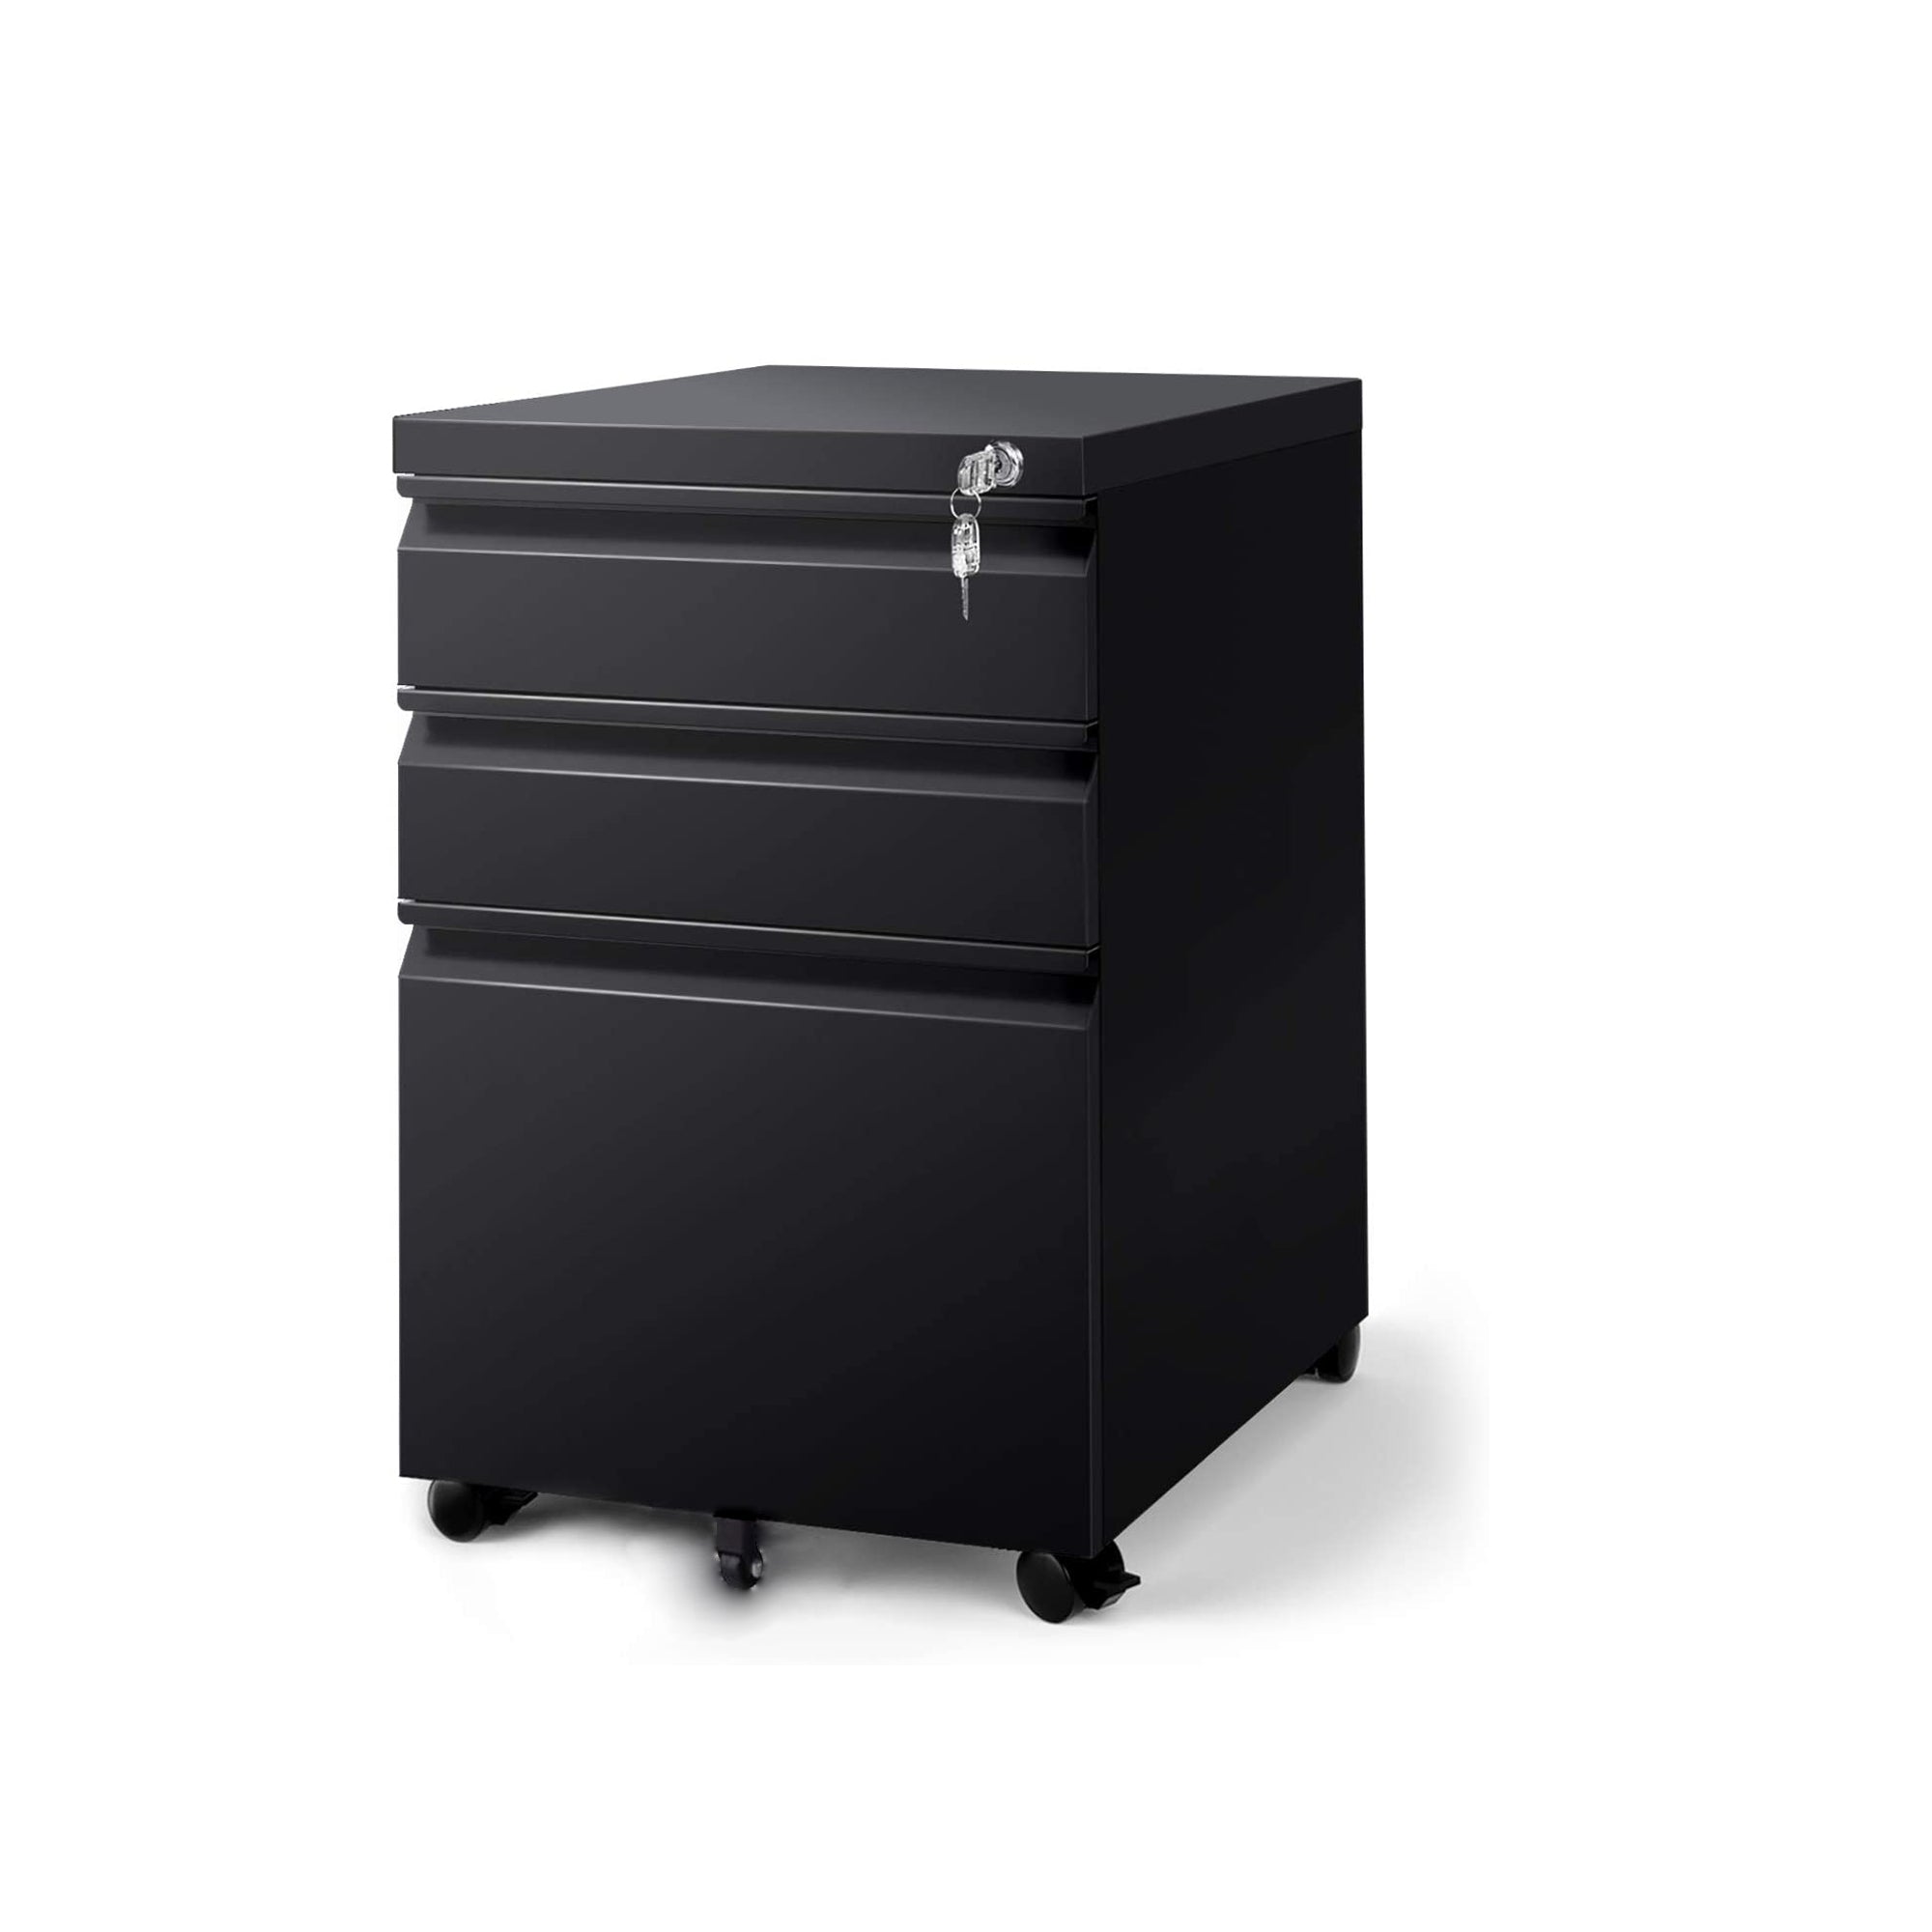 3 Drawer Mobile Rolling Steel File Cabinet with Lock on Anti-tilt Wheels (Black)